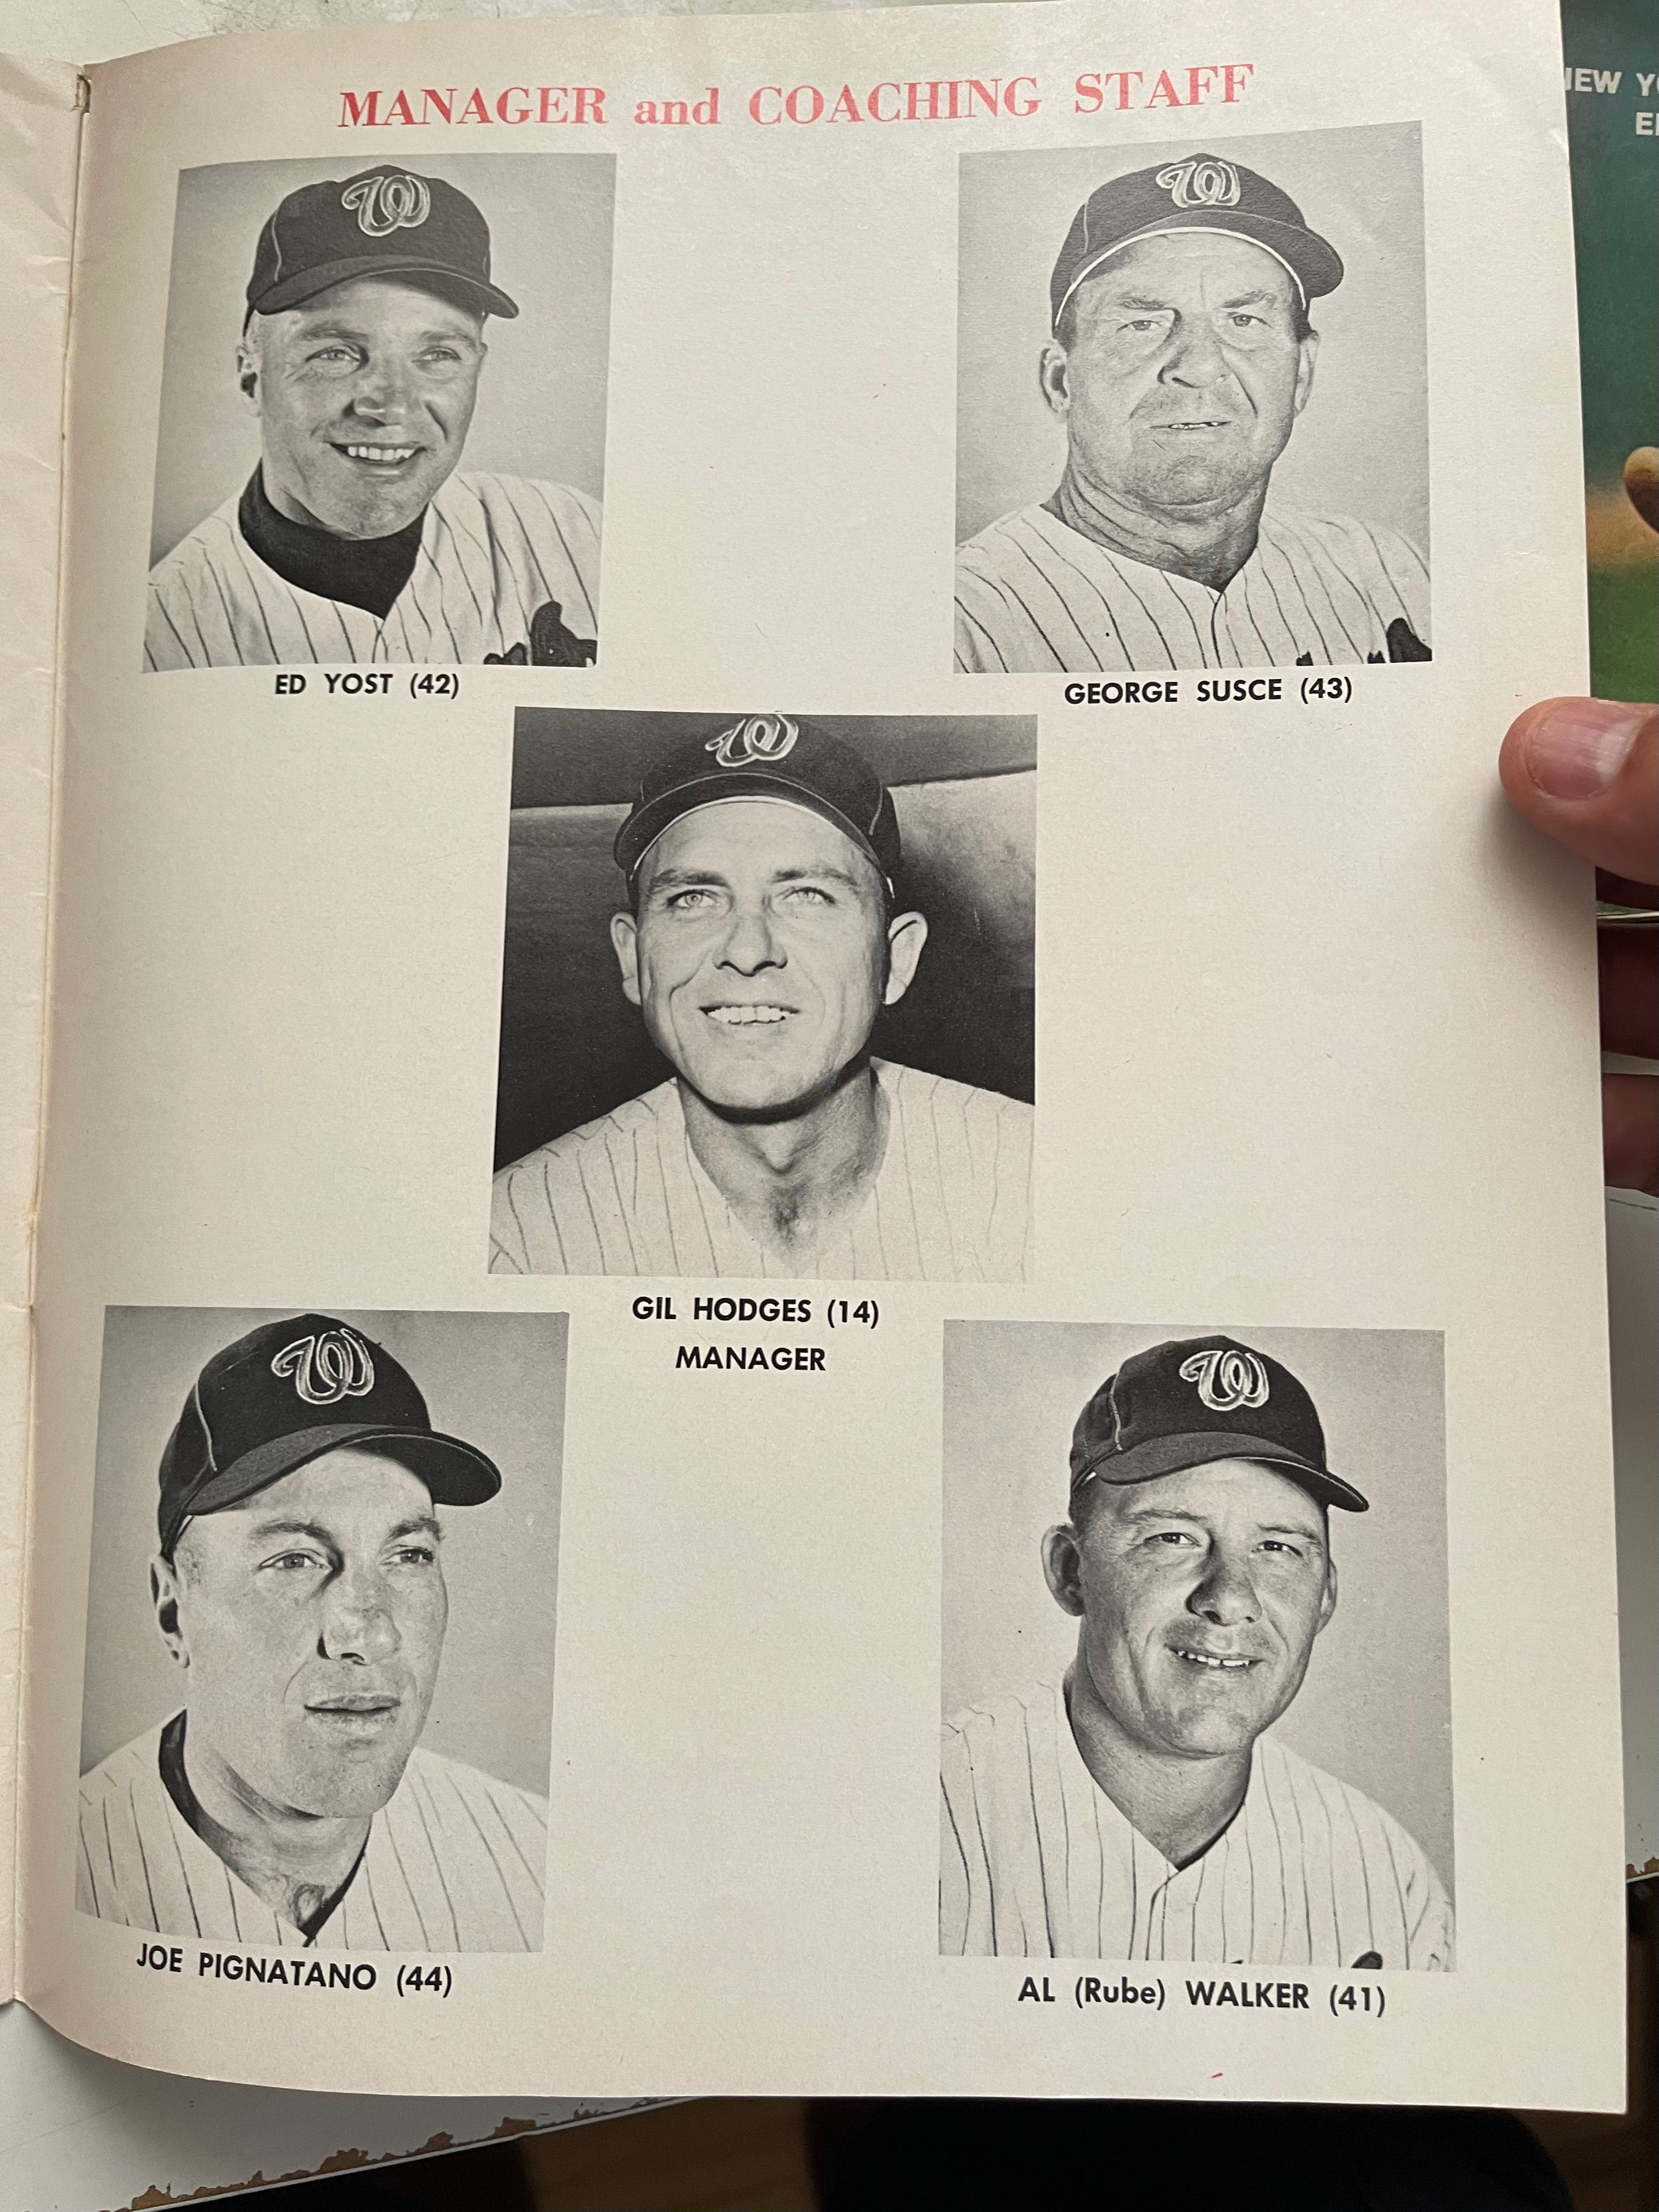 Washington Senators vs California Angels baseball game program 1967